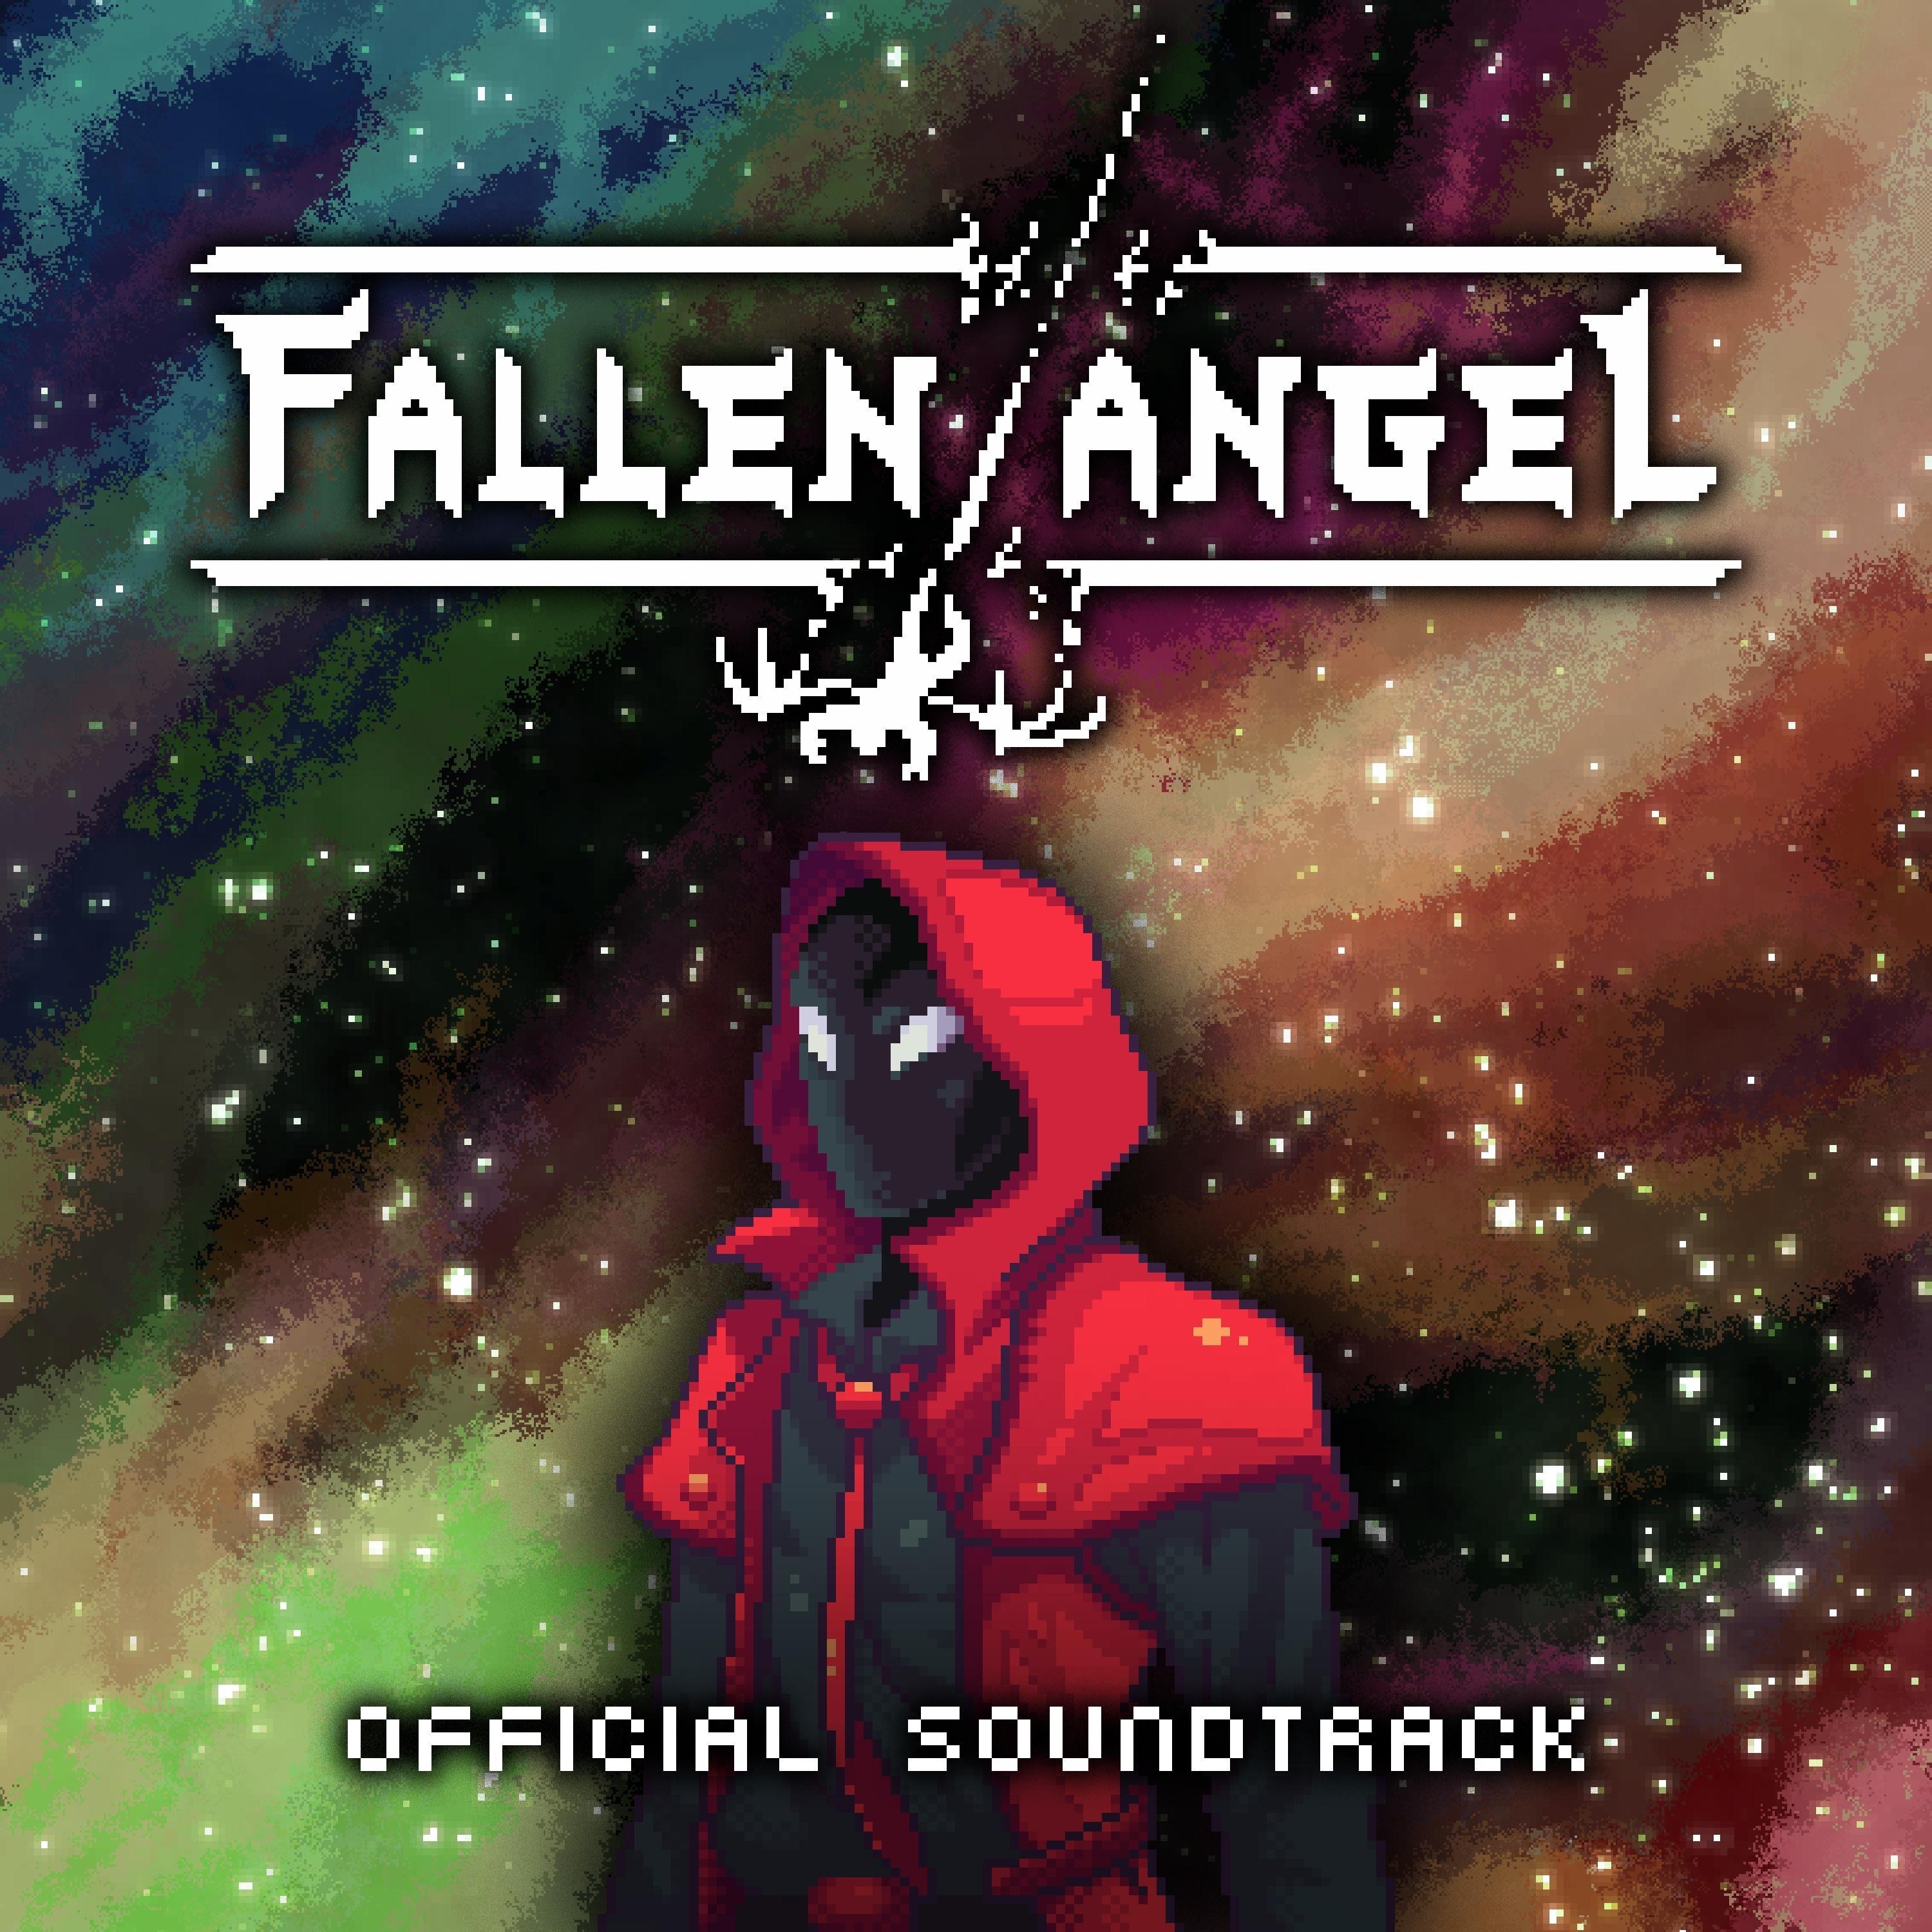 Fallen soundtrack